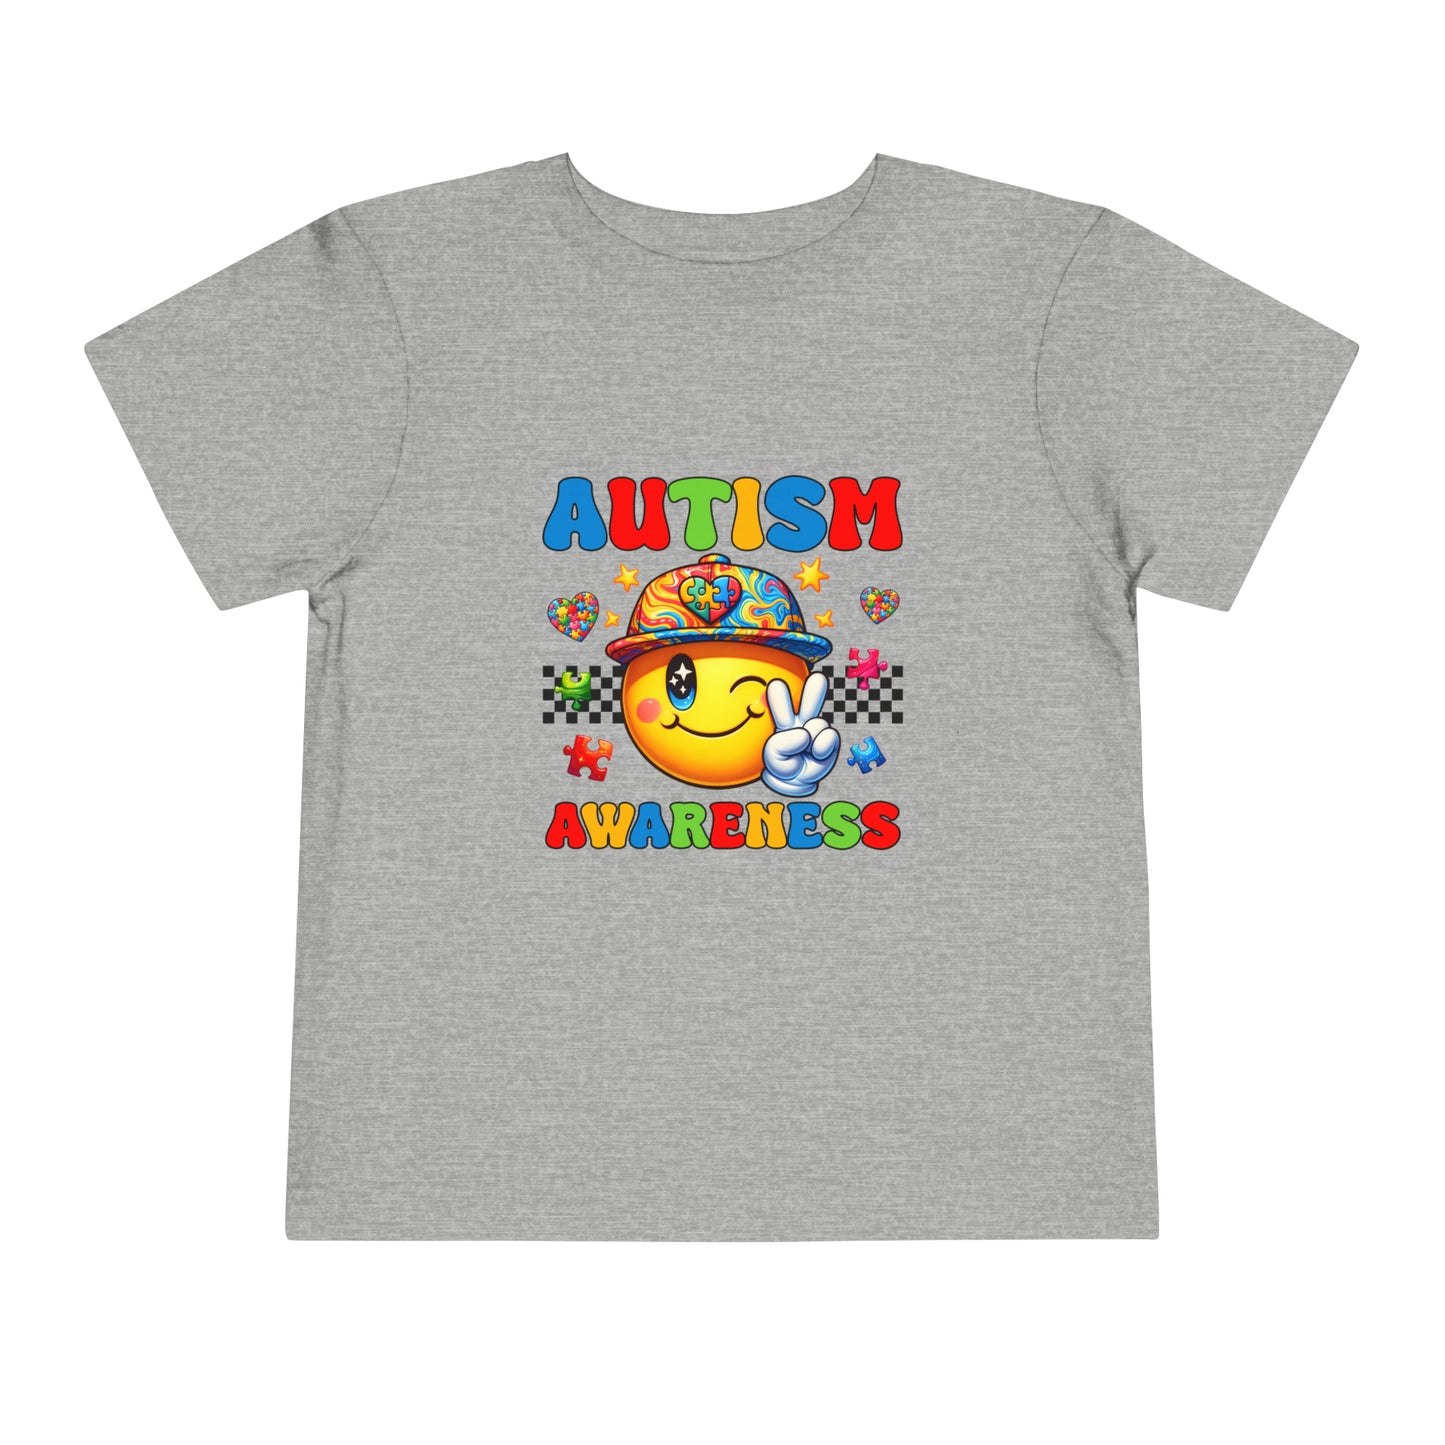 Autism Awareness Advocate Toddler Short Sleeve Tee